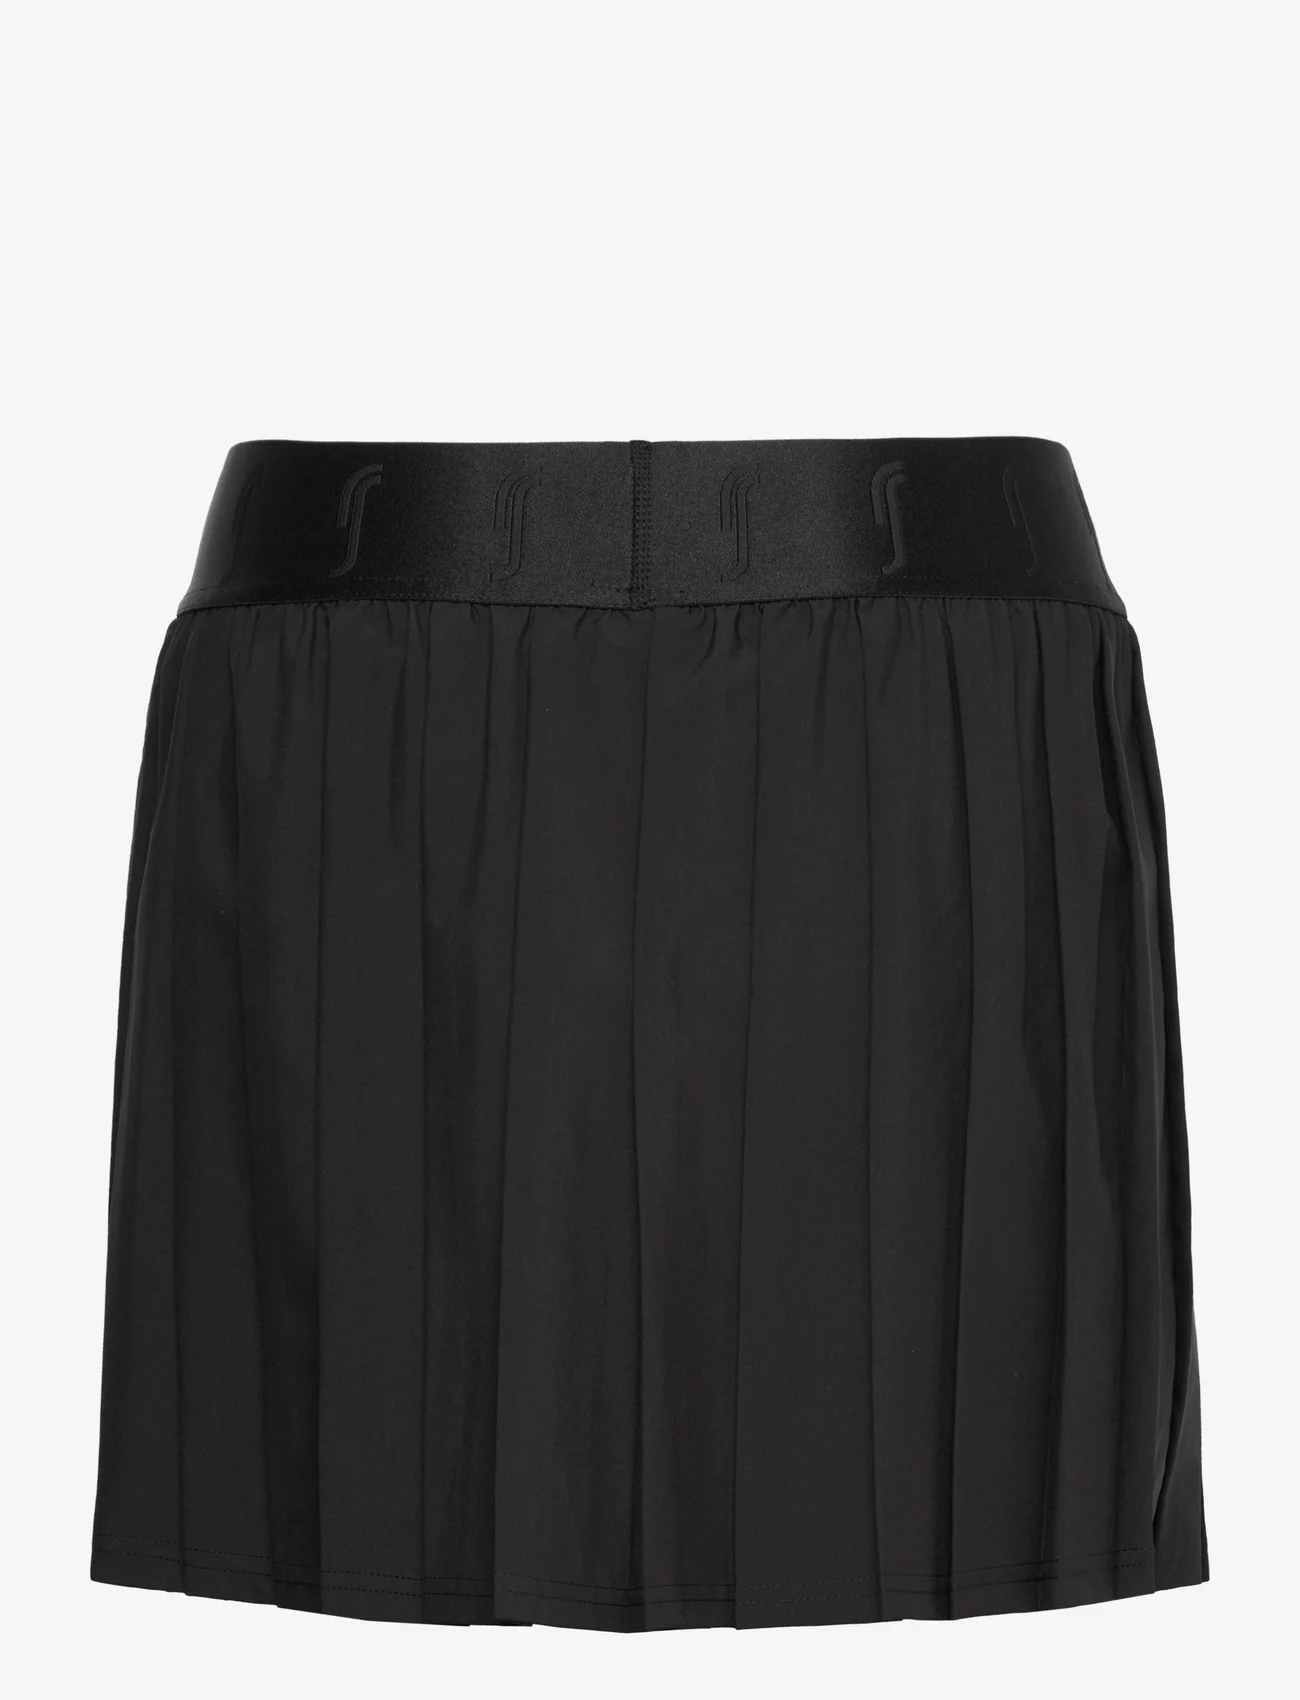 RS Sports - Women’s Pleated Skirt - svārki ar ielocēm - black - 1